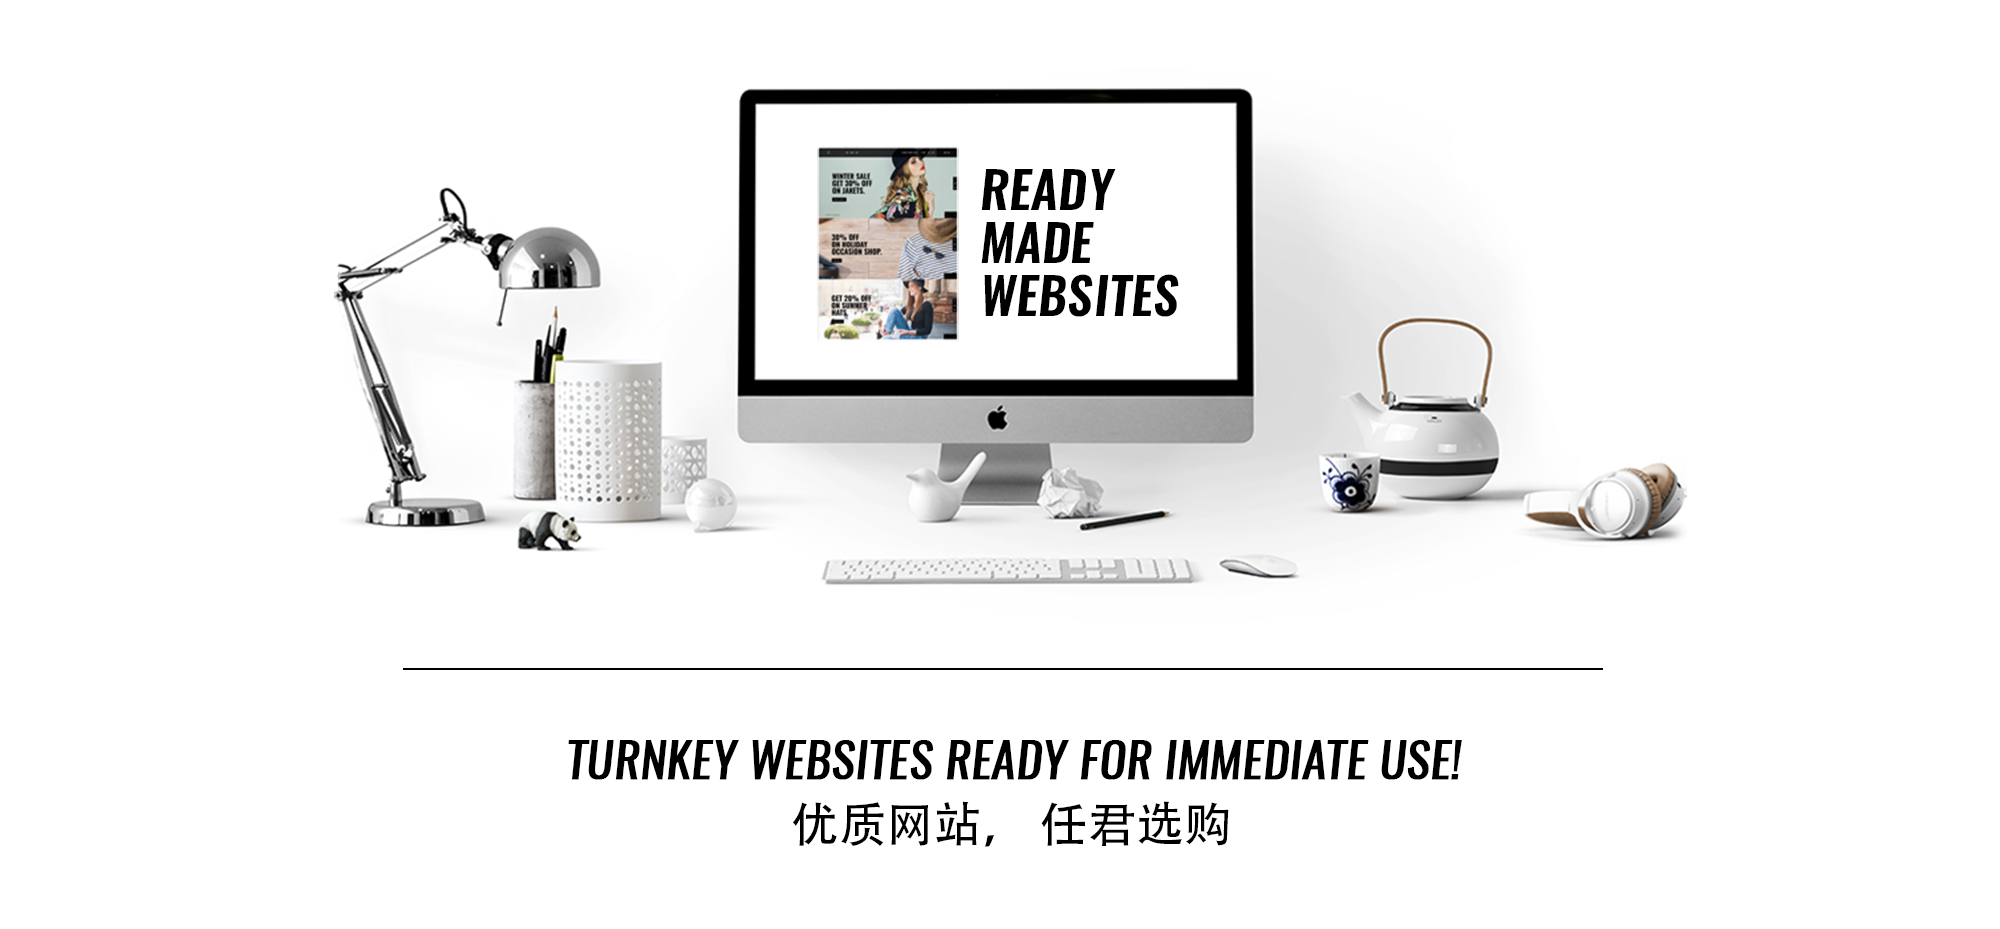 Ready-Made Websites